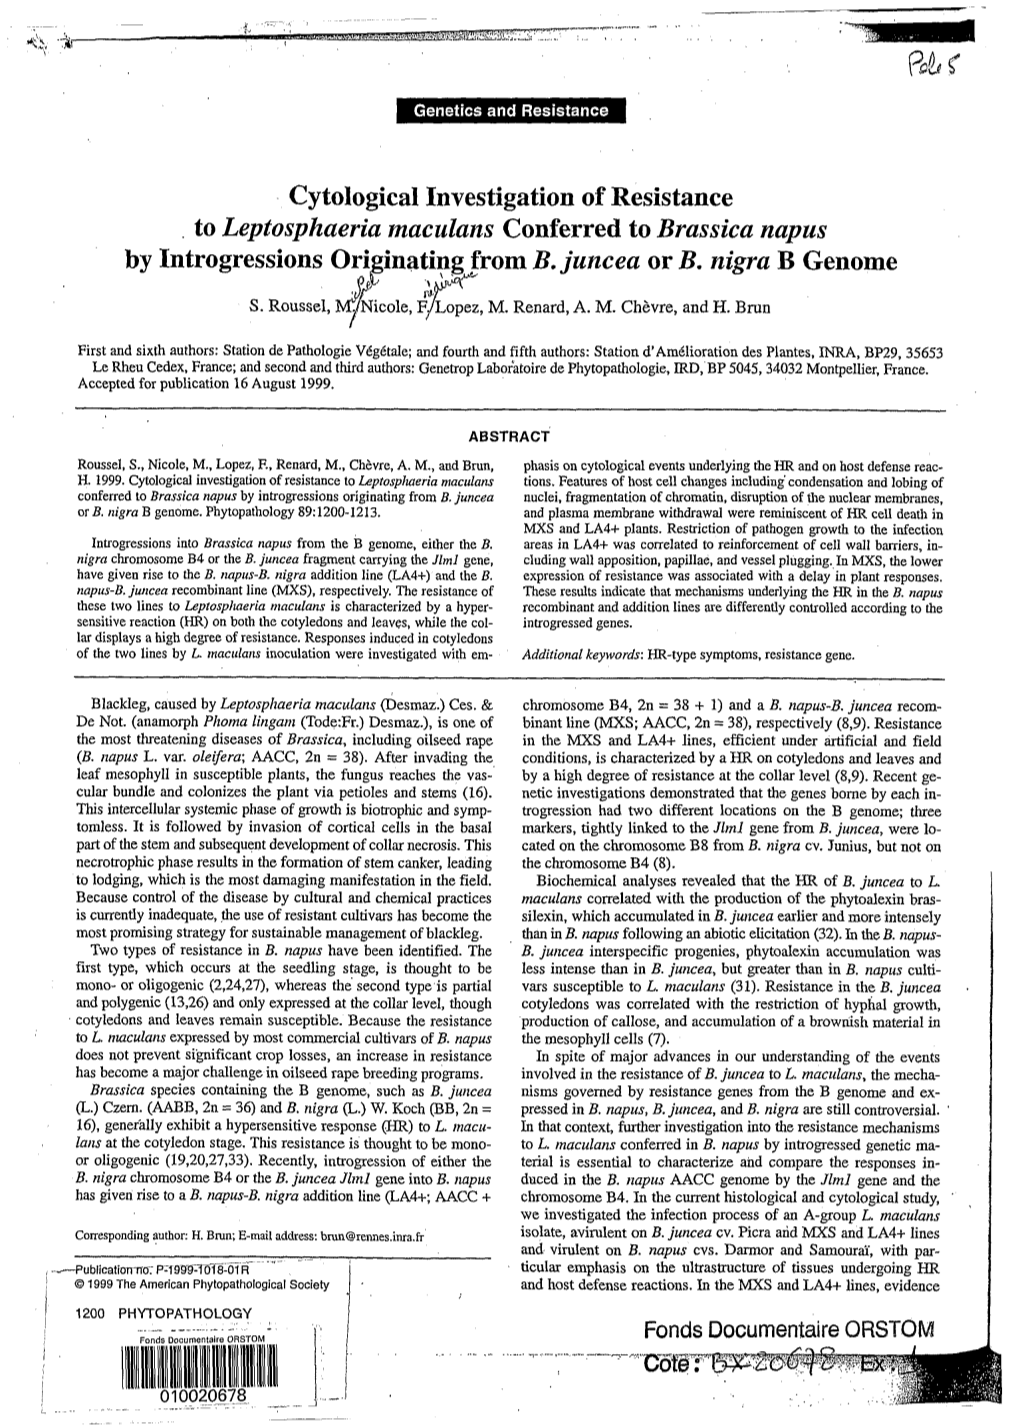 Cytological Investigation of Resistance to Leptosphaeria Maculans